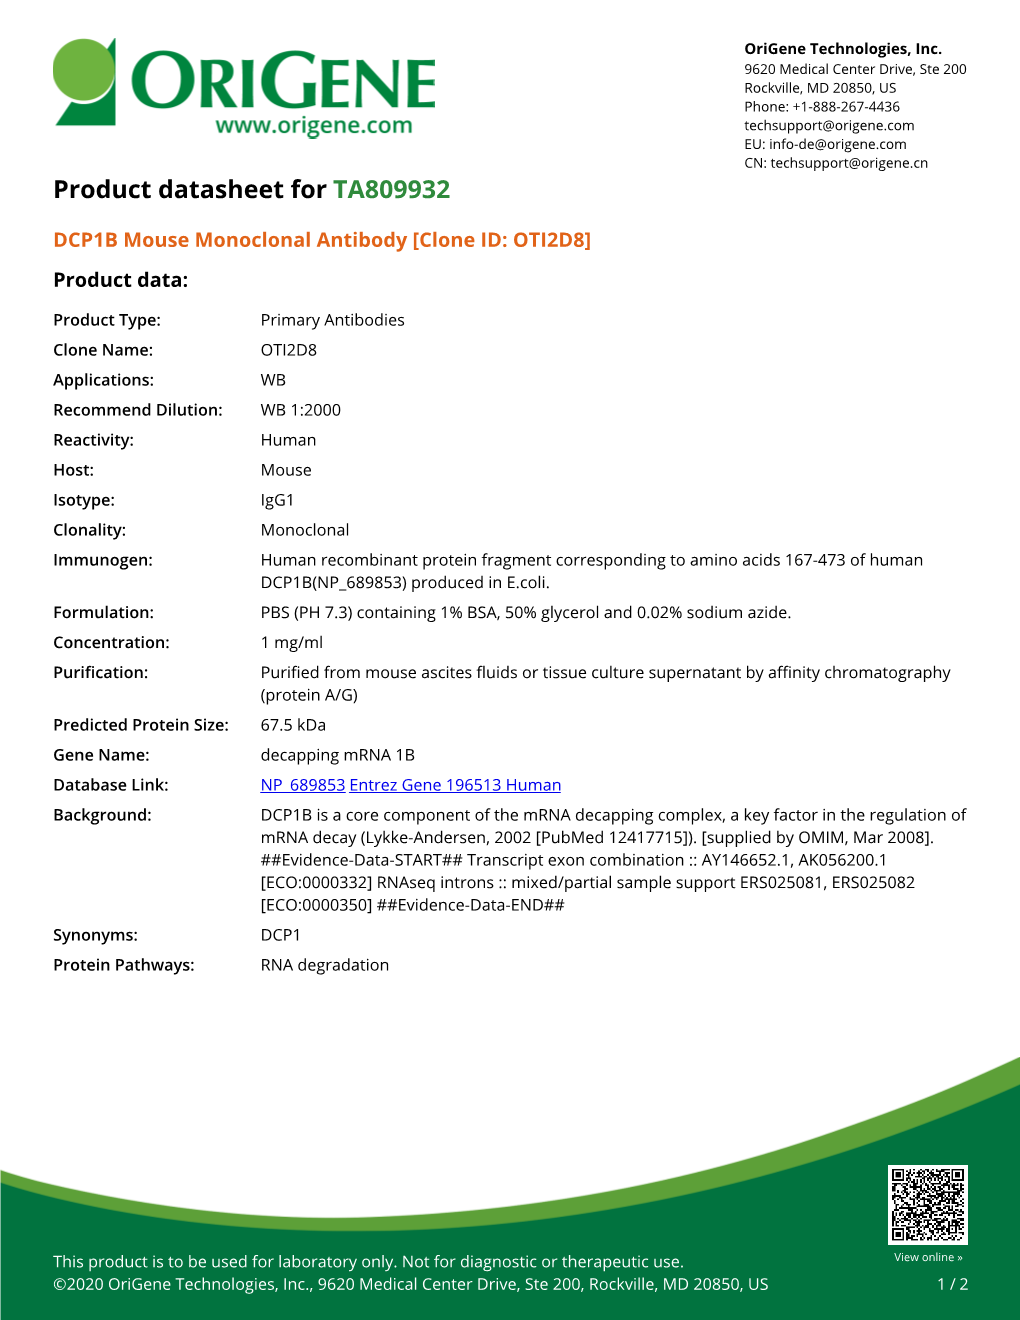 DCP1B Mouse Monoclonal Antibody [Clone ID: OTI2D8] Product Data